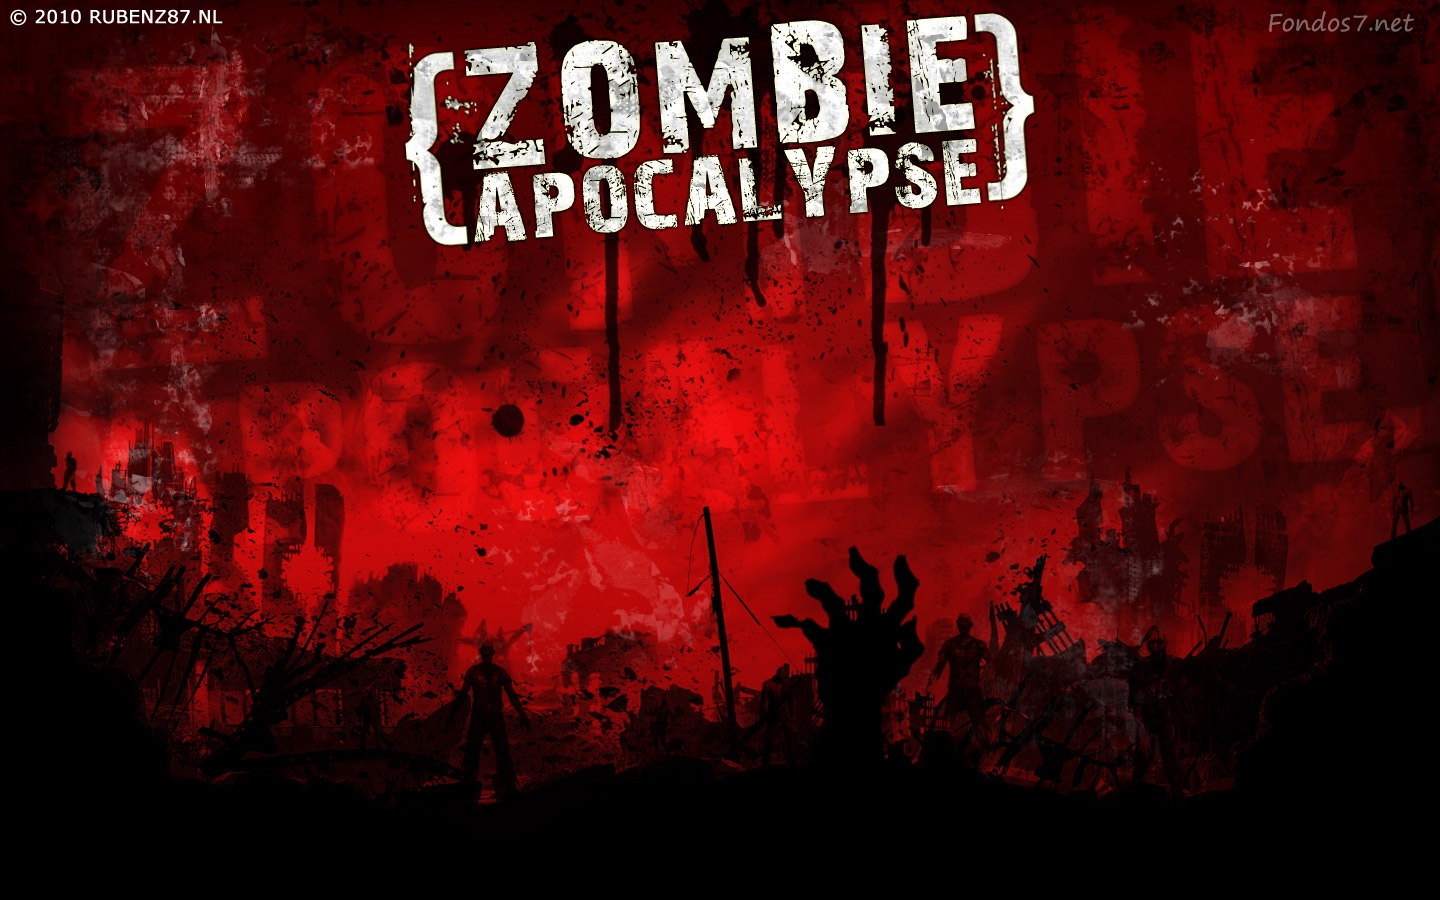 Descargar Fondos De Pantalla Zombies Y Apocalipsis HD Widescreen